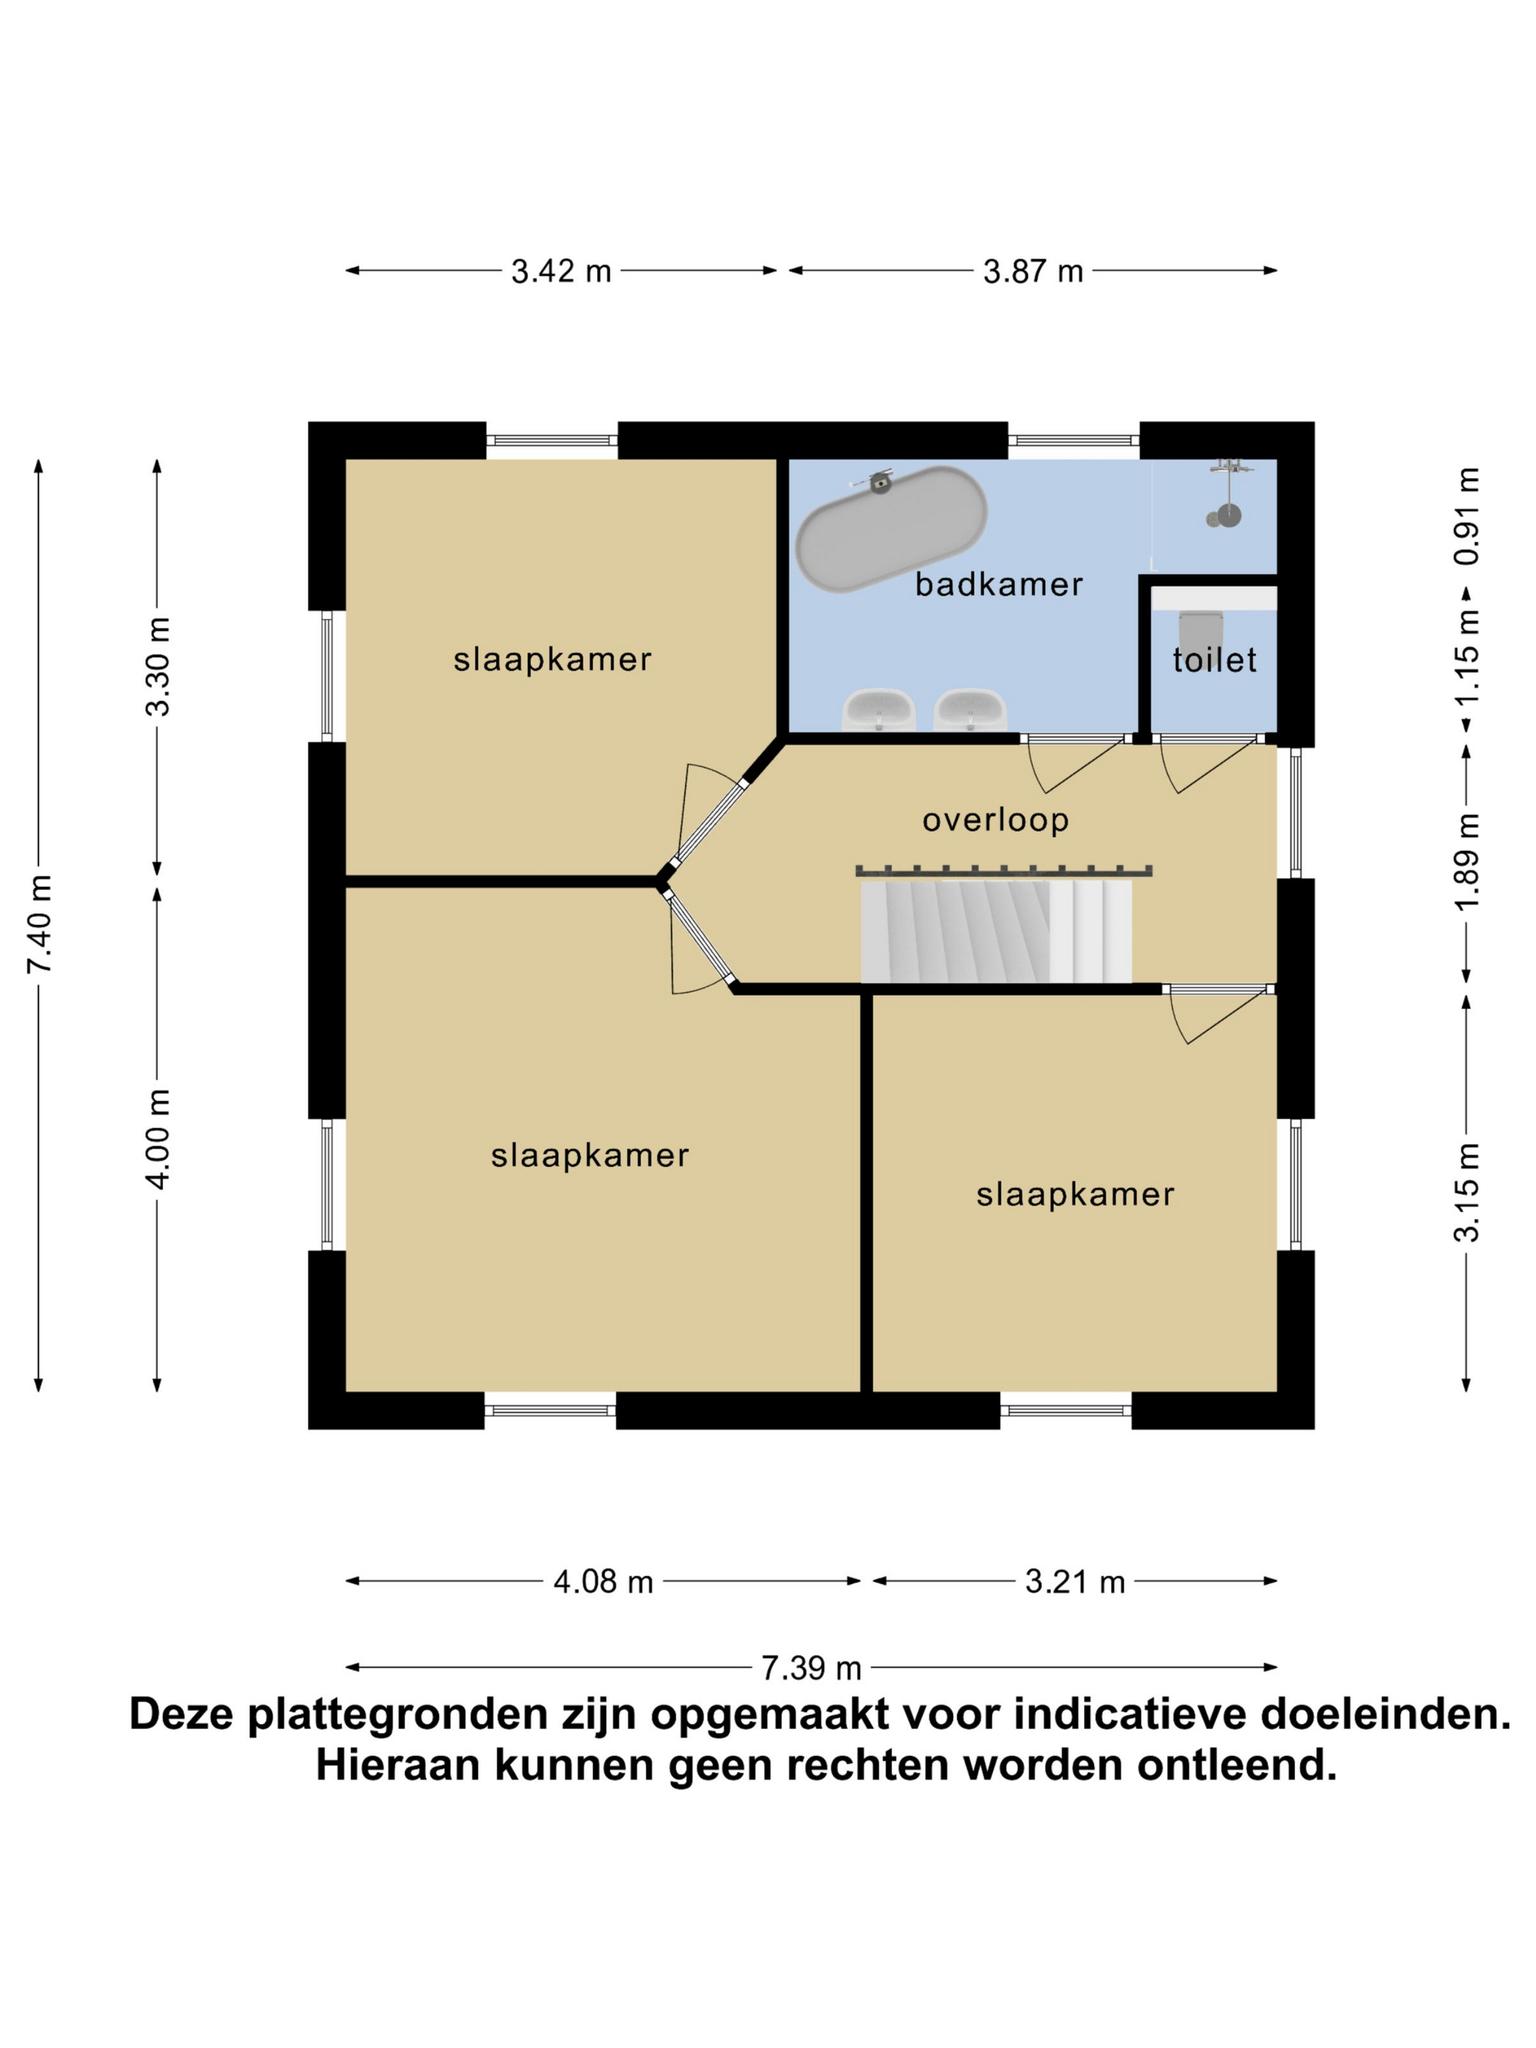 Borne – Stroom-Eschlaan 98 – Plattegrond 2